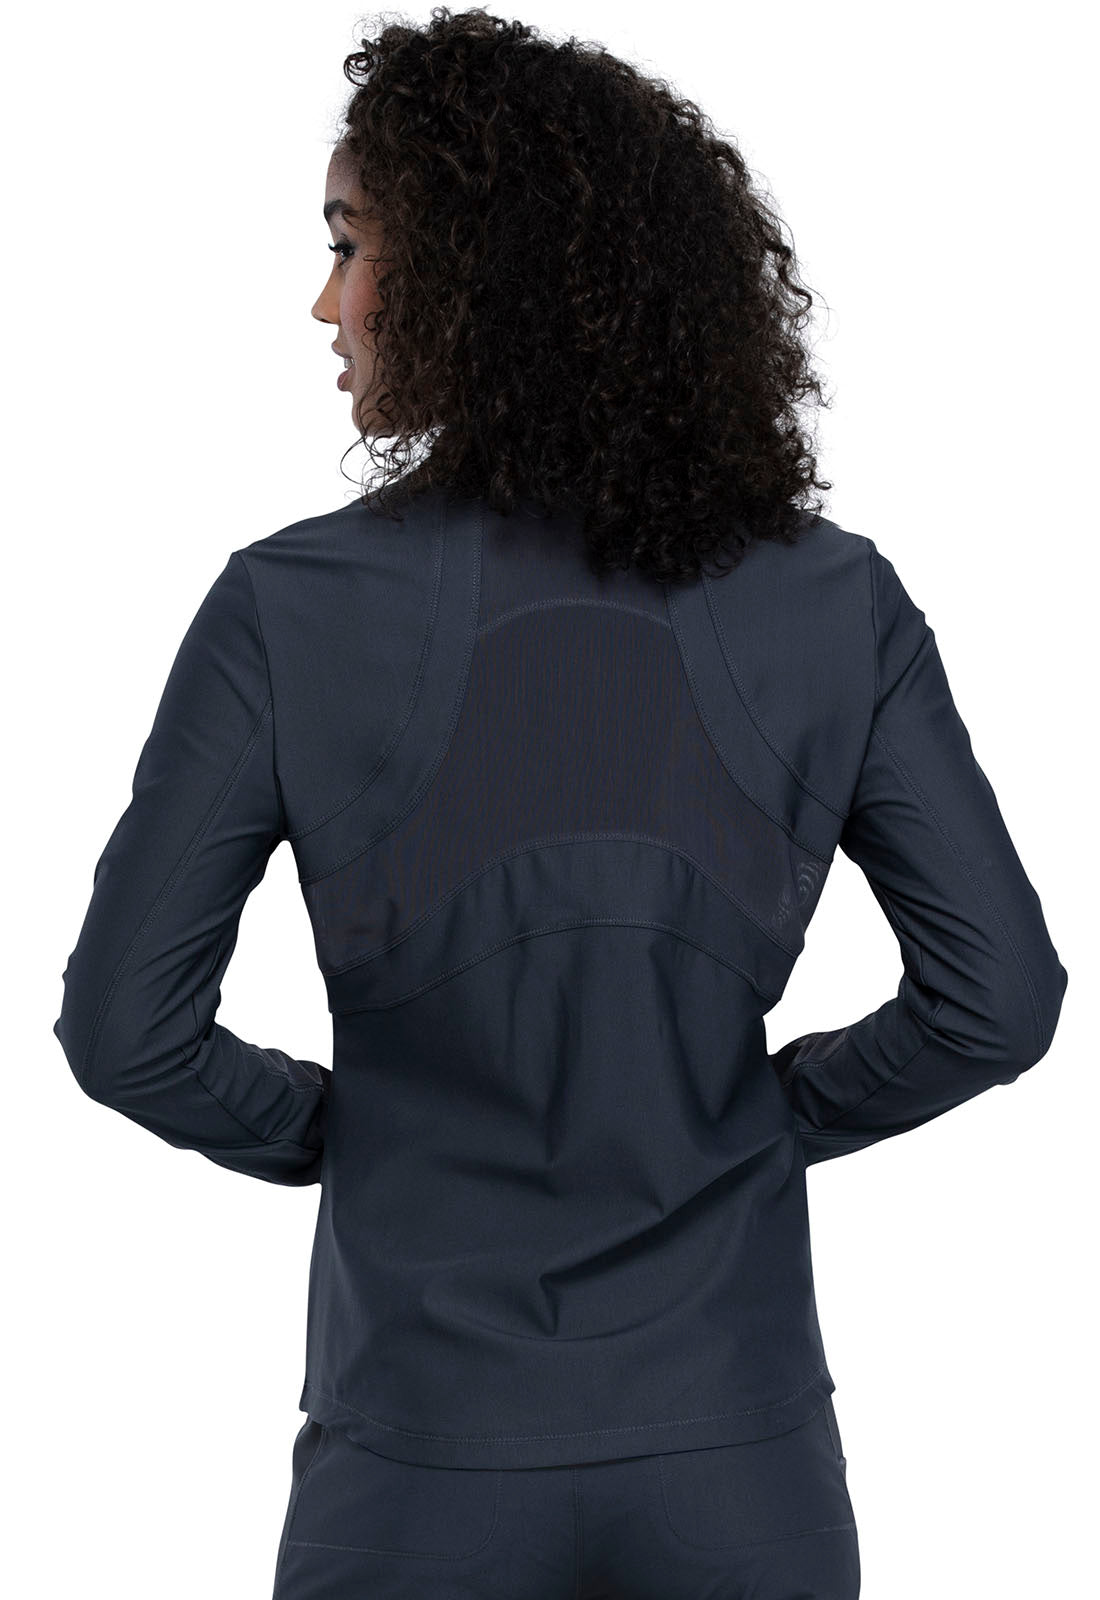 Women's Cherokee Form Zip Front Jacket - BodyMoves Scrubs Boutique